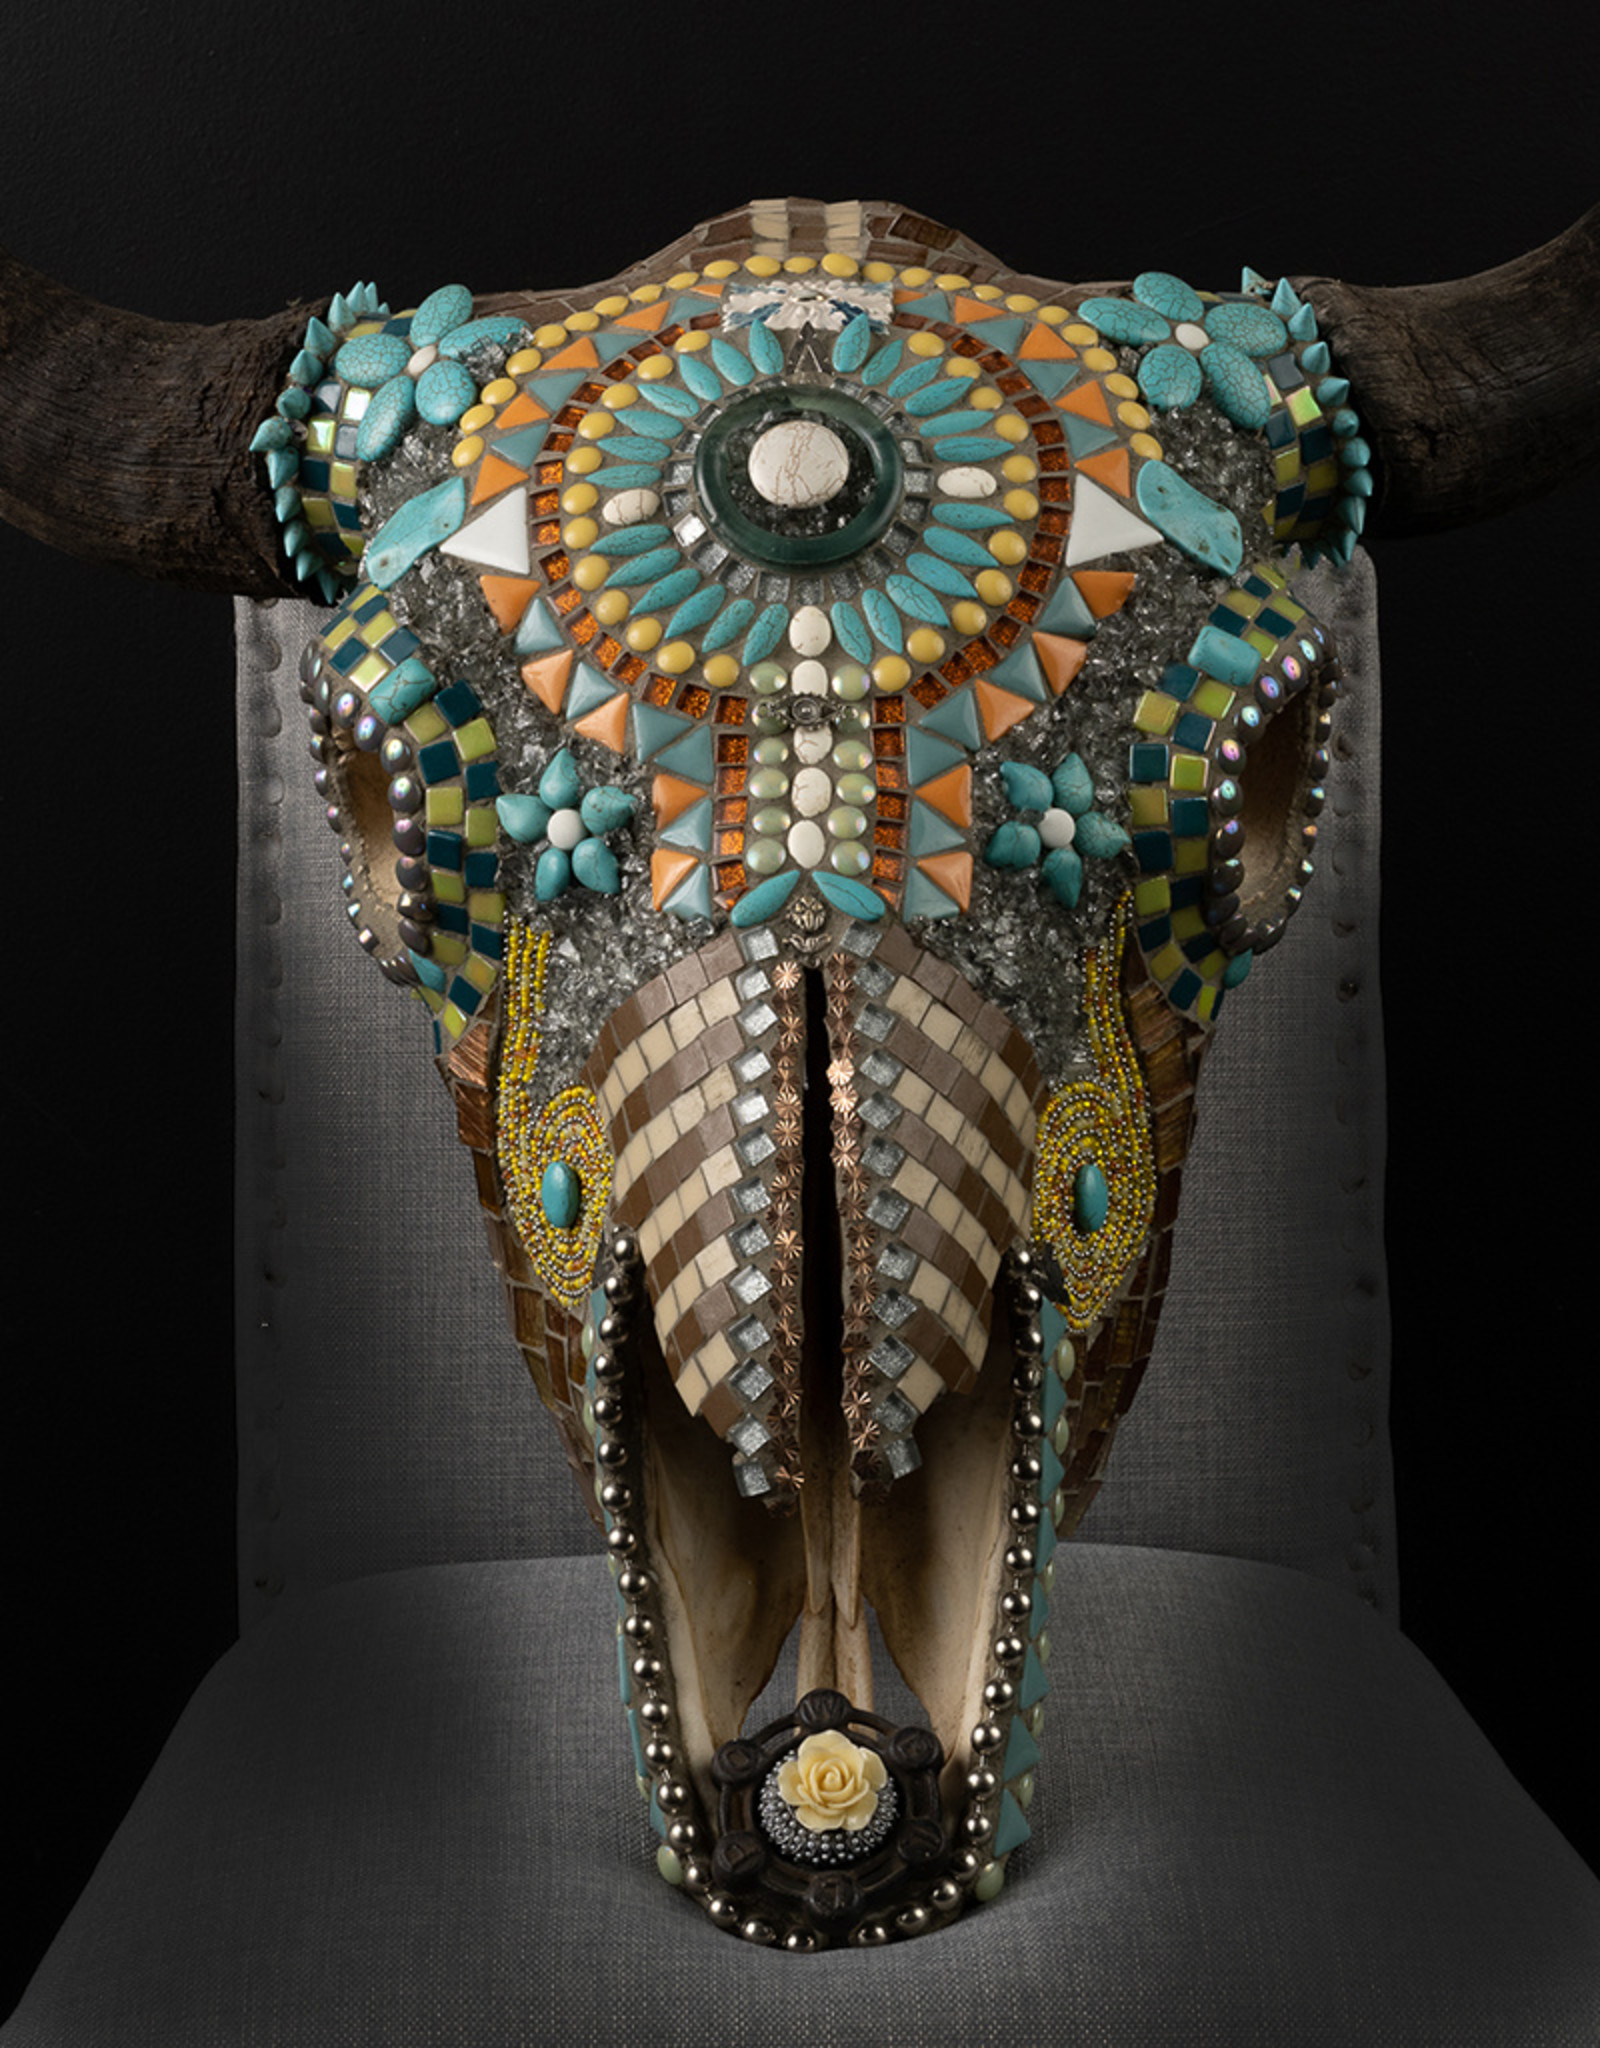 Kelly Nygard The Plumber - Decorated Buffalo Skull - Kelly Nygard